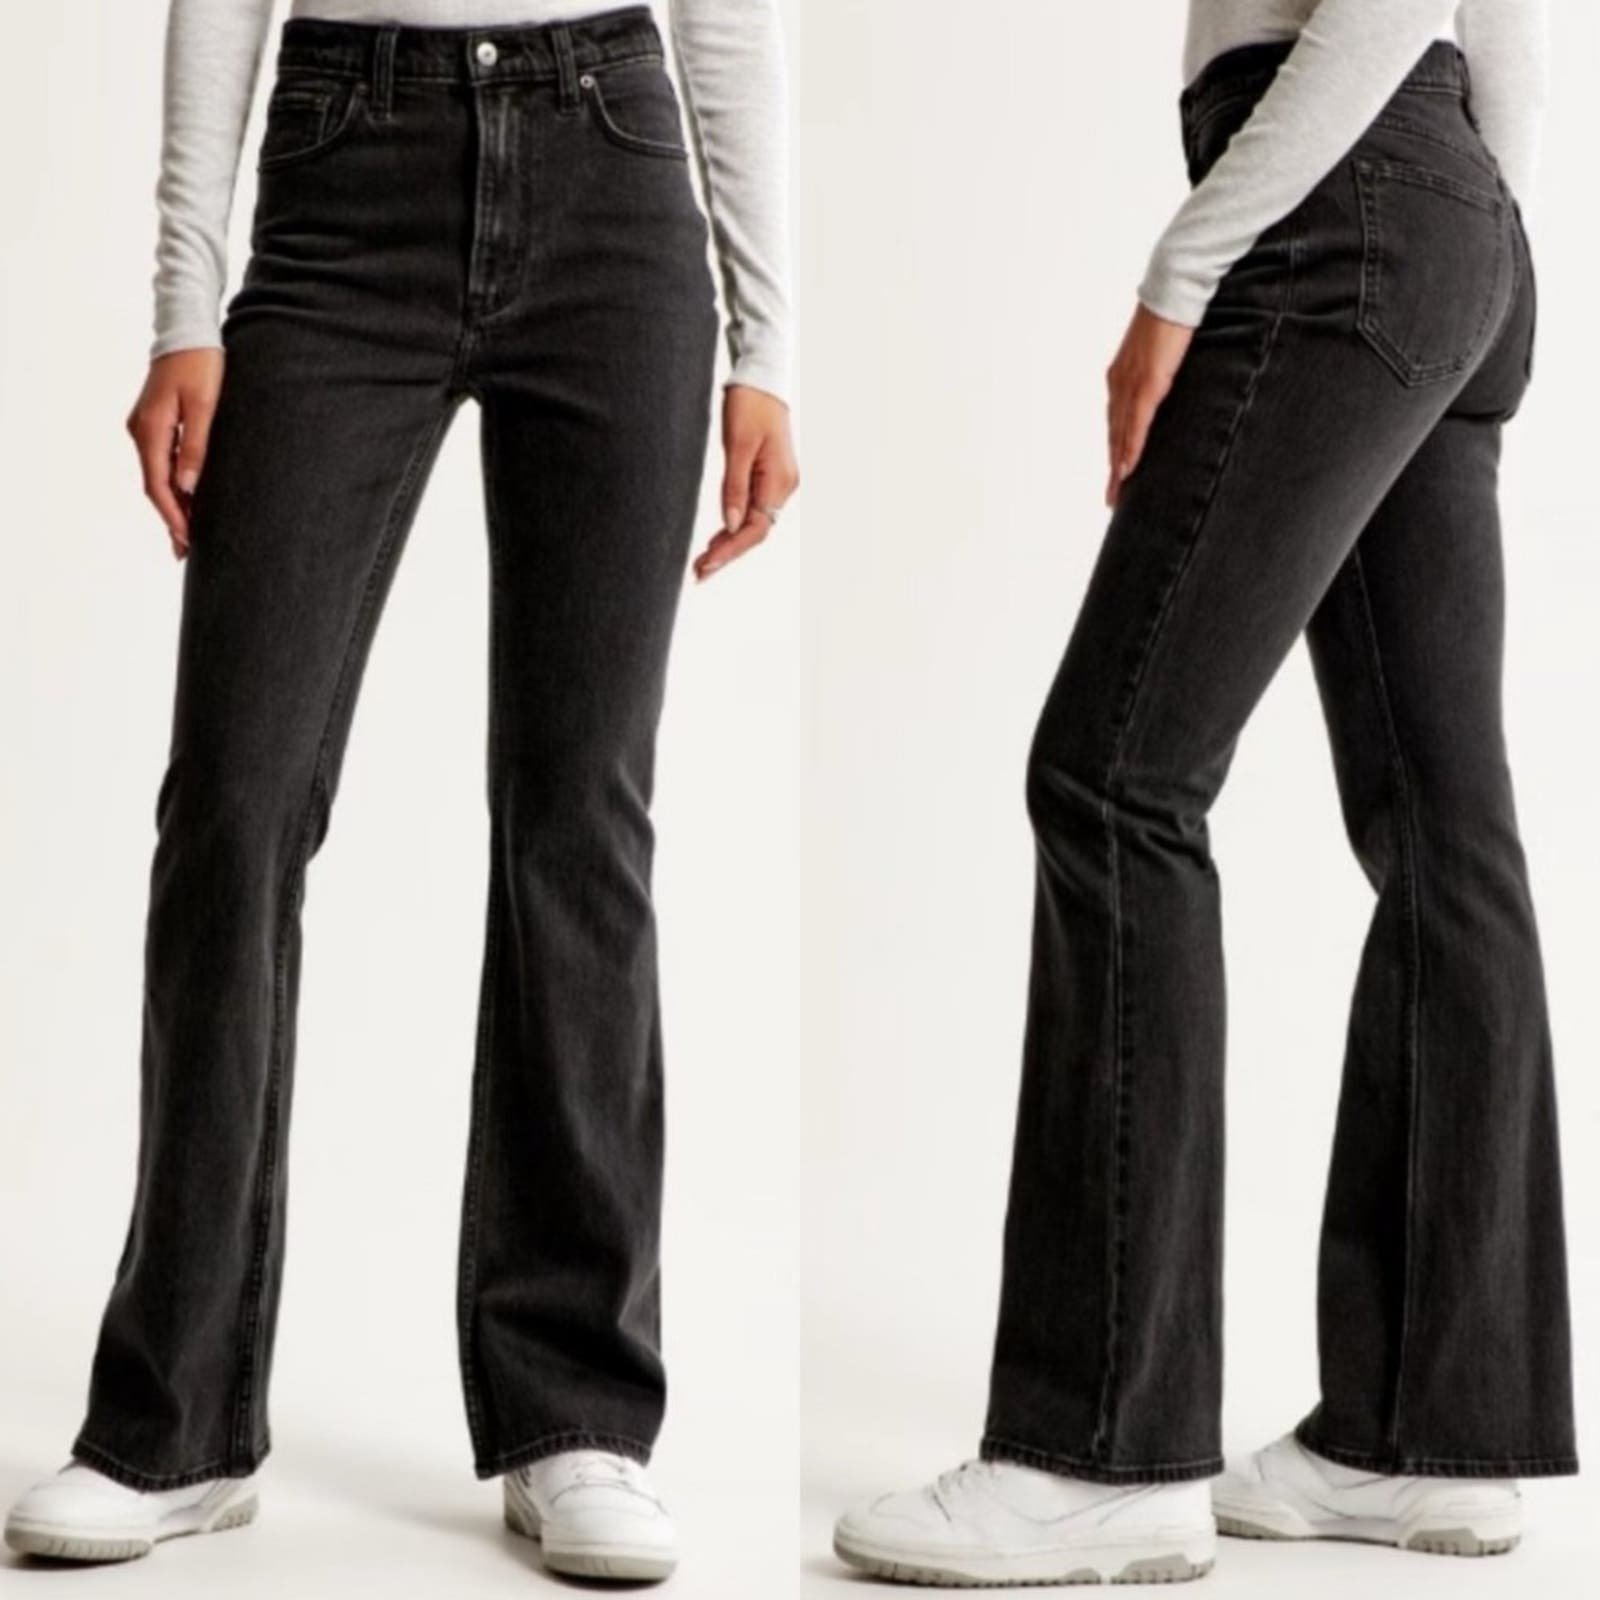 Abercrombie & Fitch 70s Vintage Flare Jeans Charcoal Black Womens Size 29 / 8 RFqtgJm63